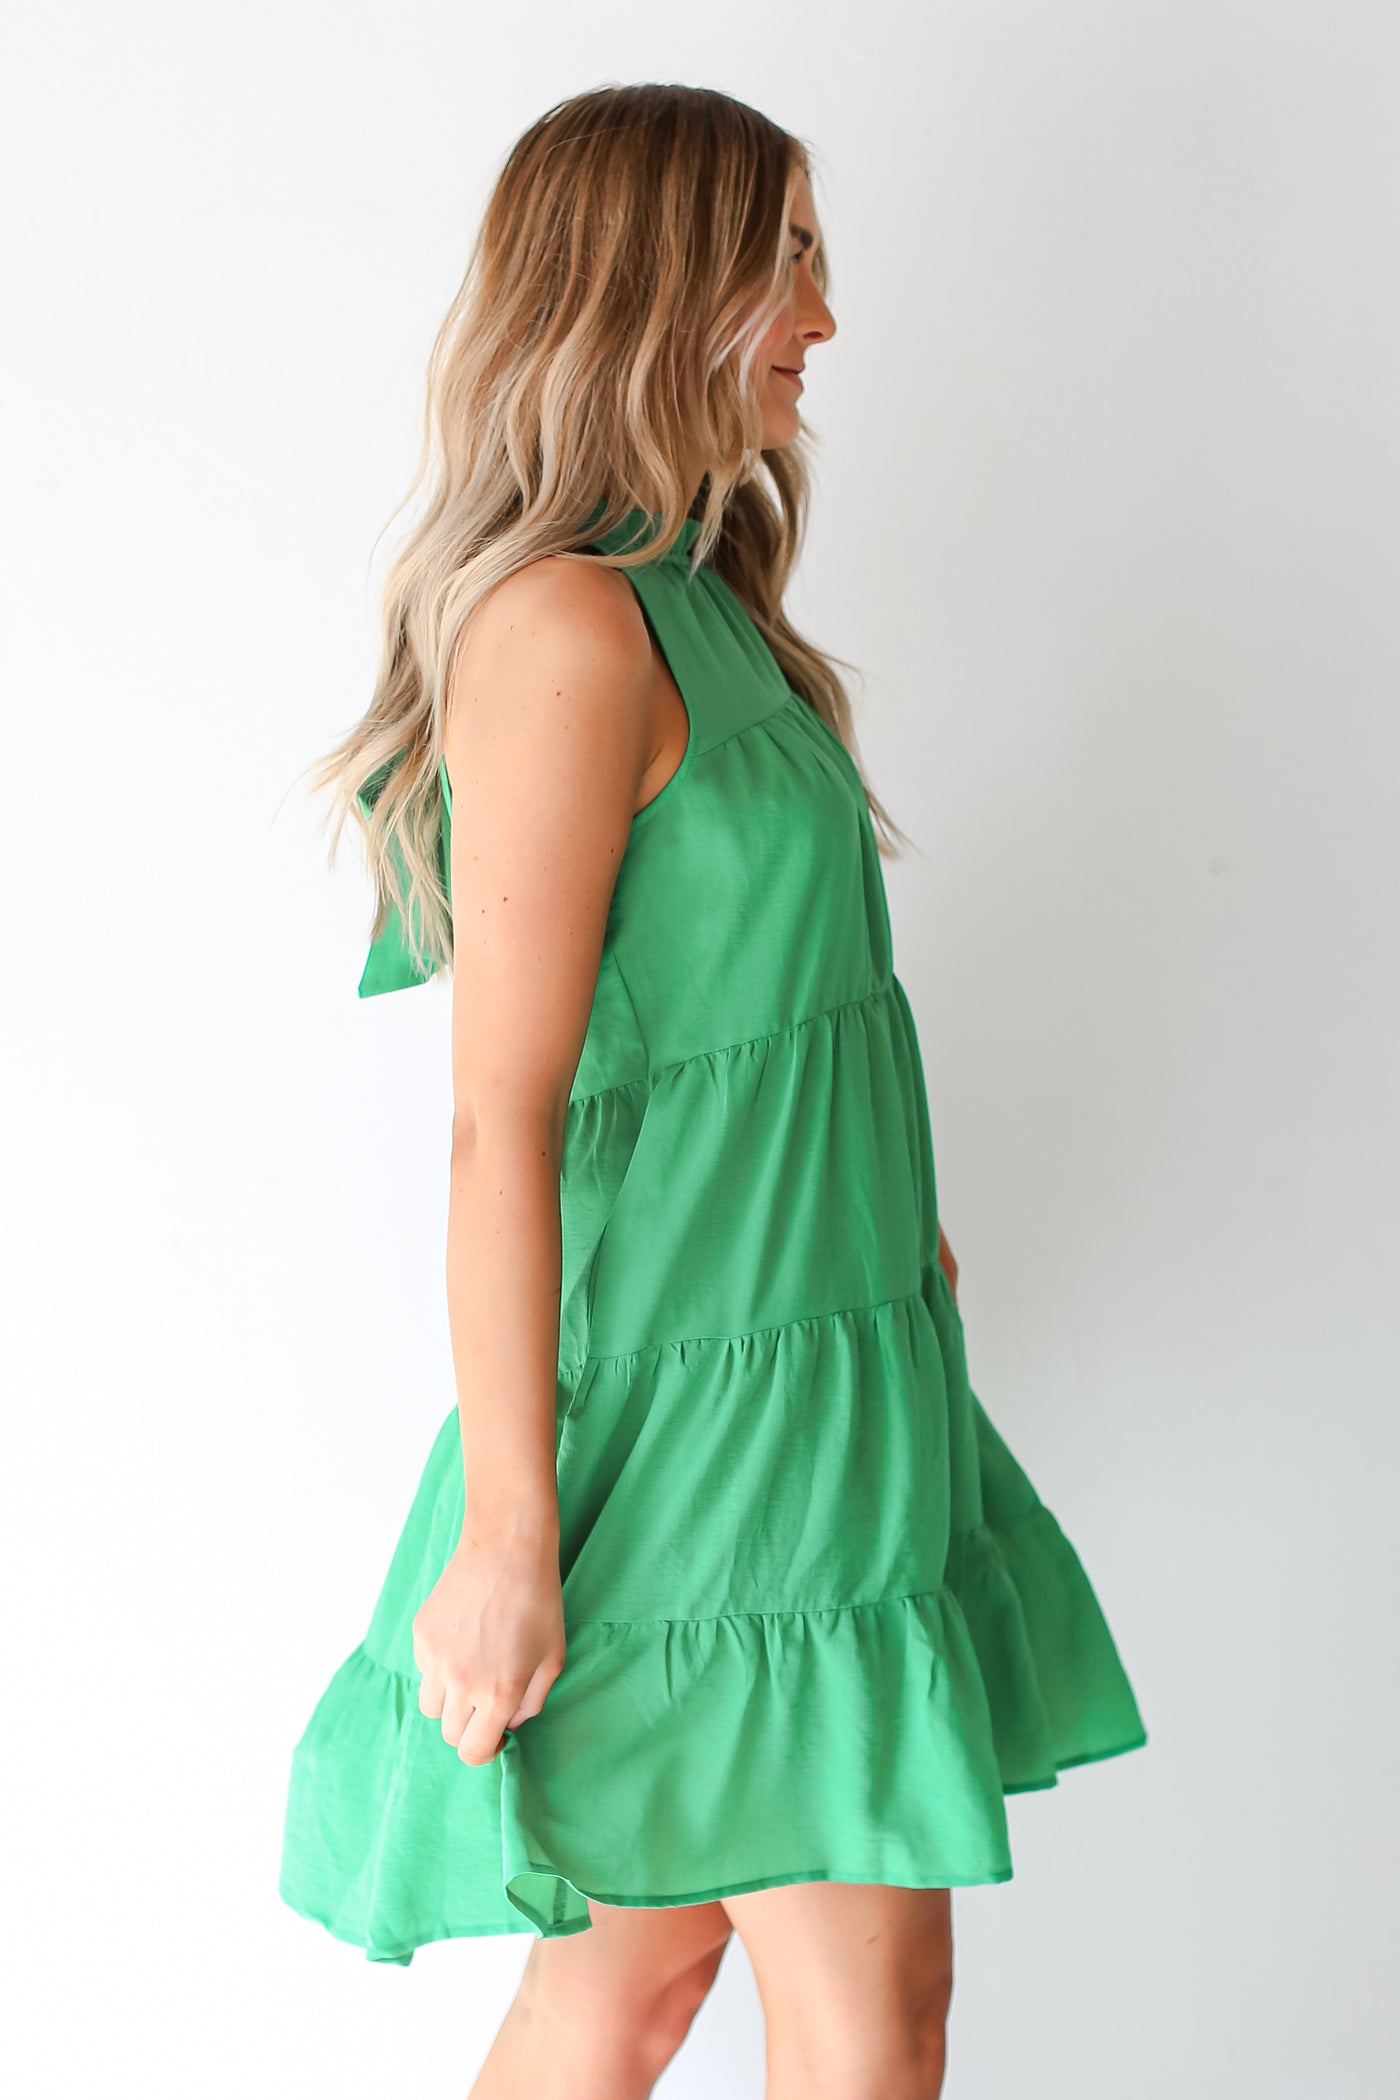 green Tiered Mini Dress side view